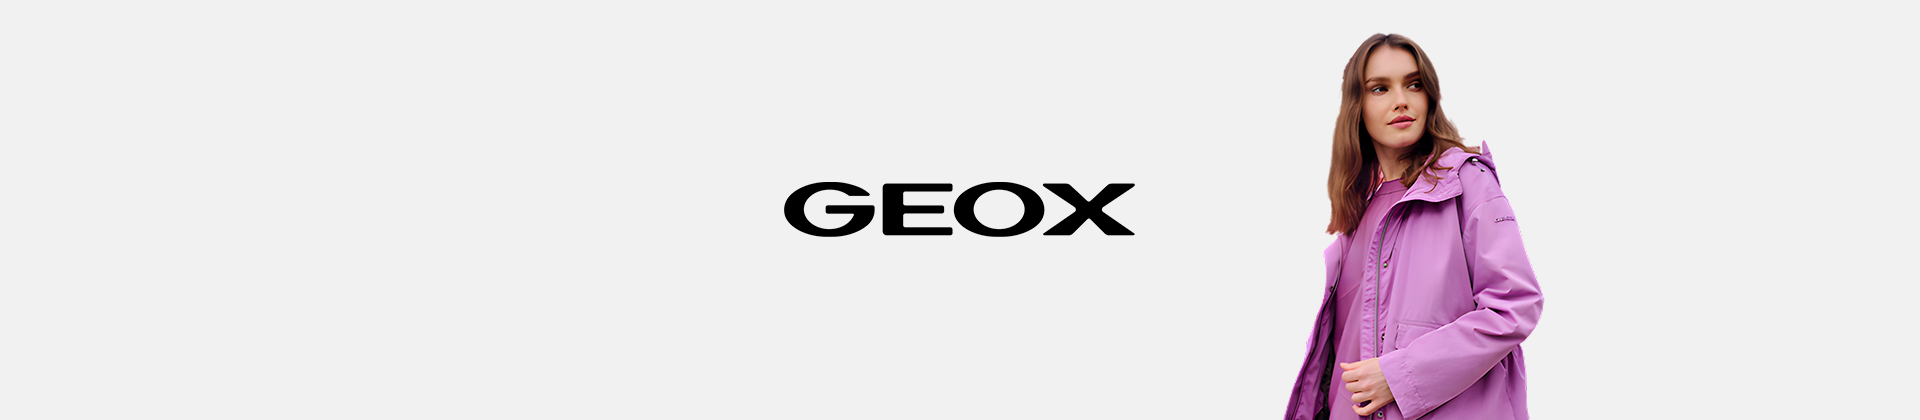 Geox shoes men and women online